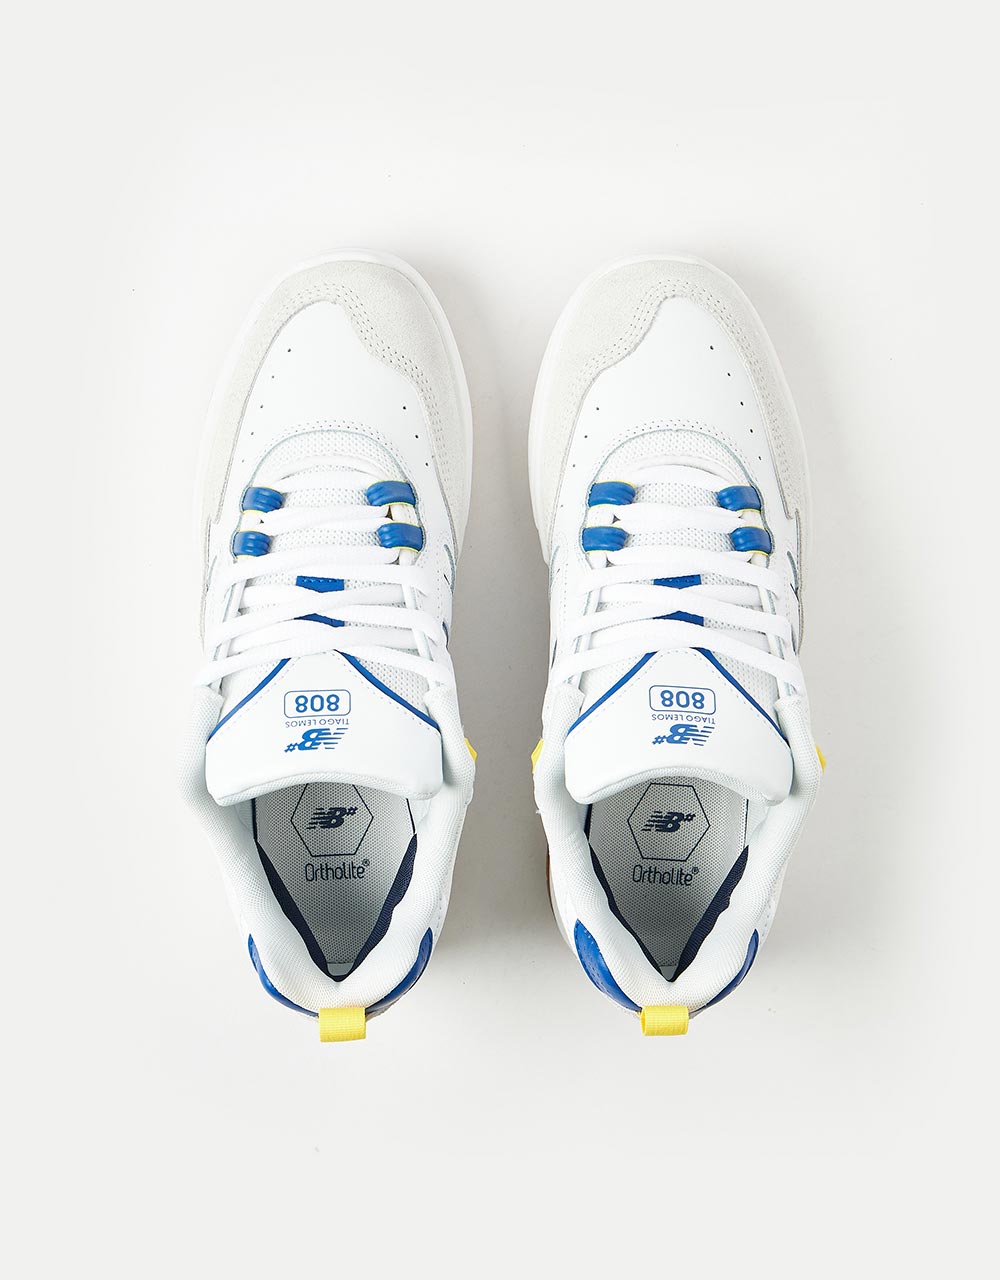 New Balance Numeric 808 Skate Shoes - White/Royal